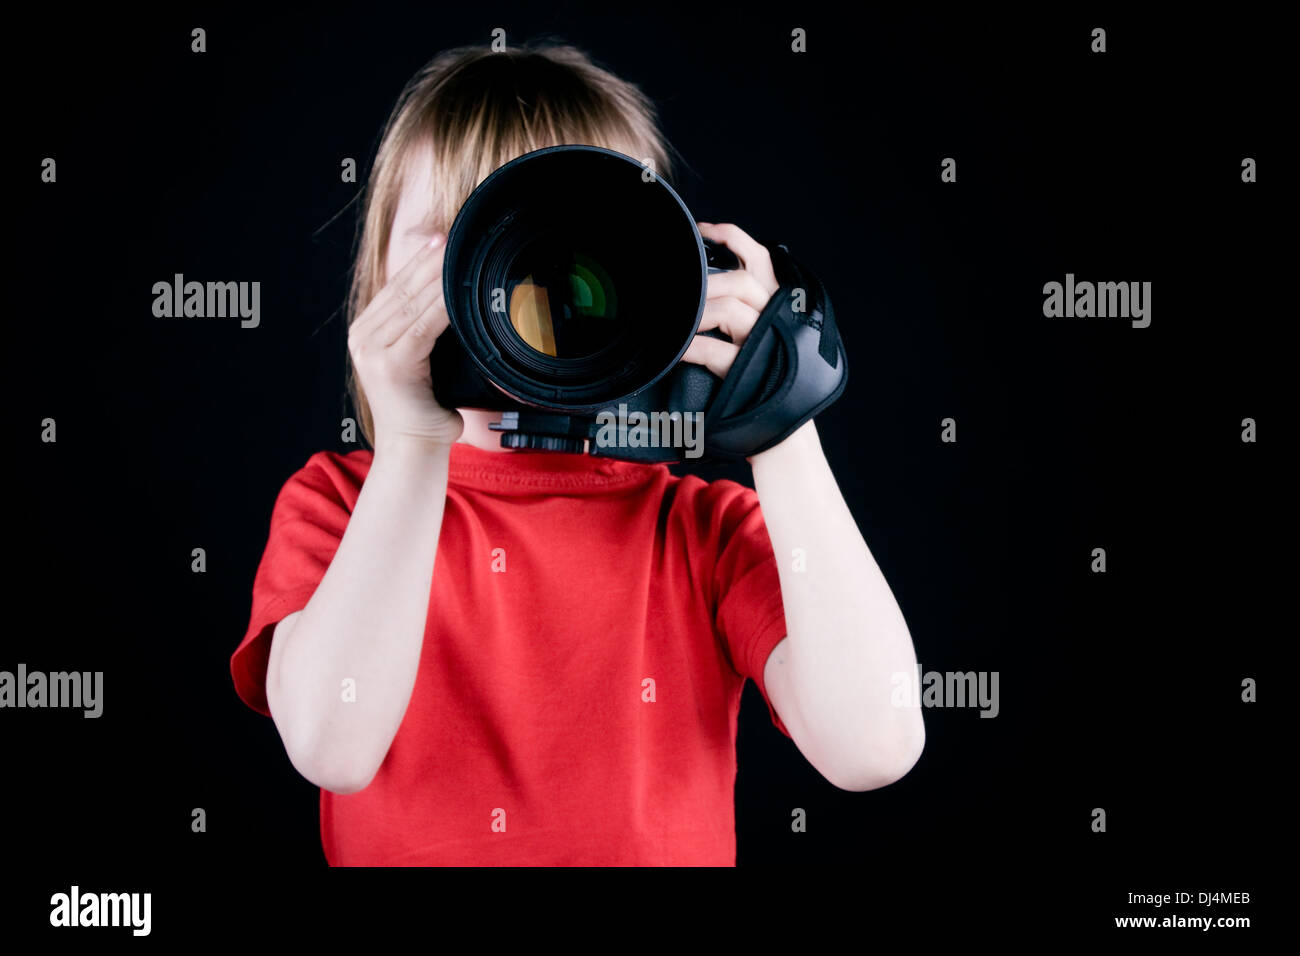 The child - photographer. Stock Photo